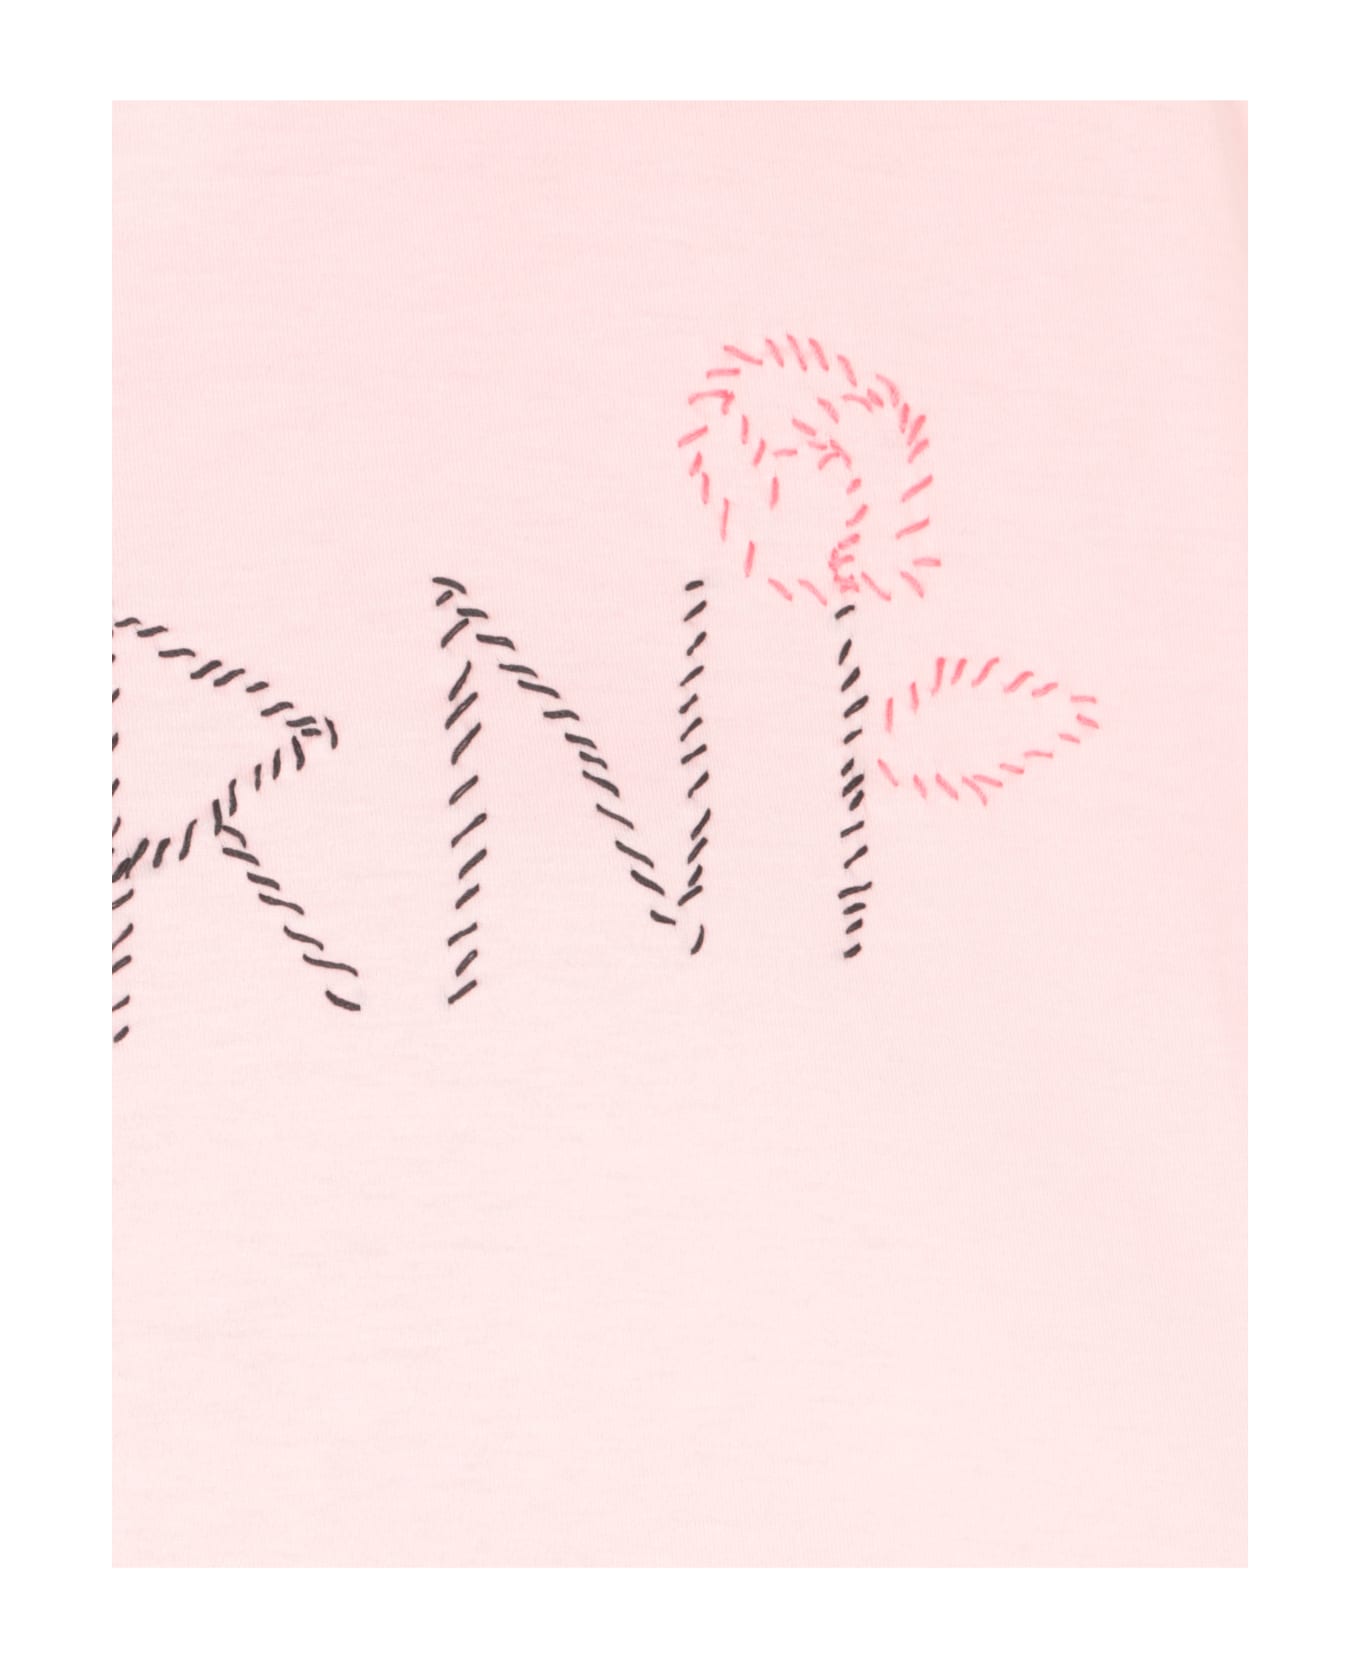 Marni T-shirt With Logo - Pink